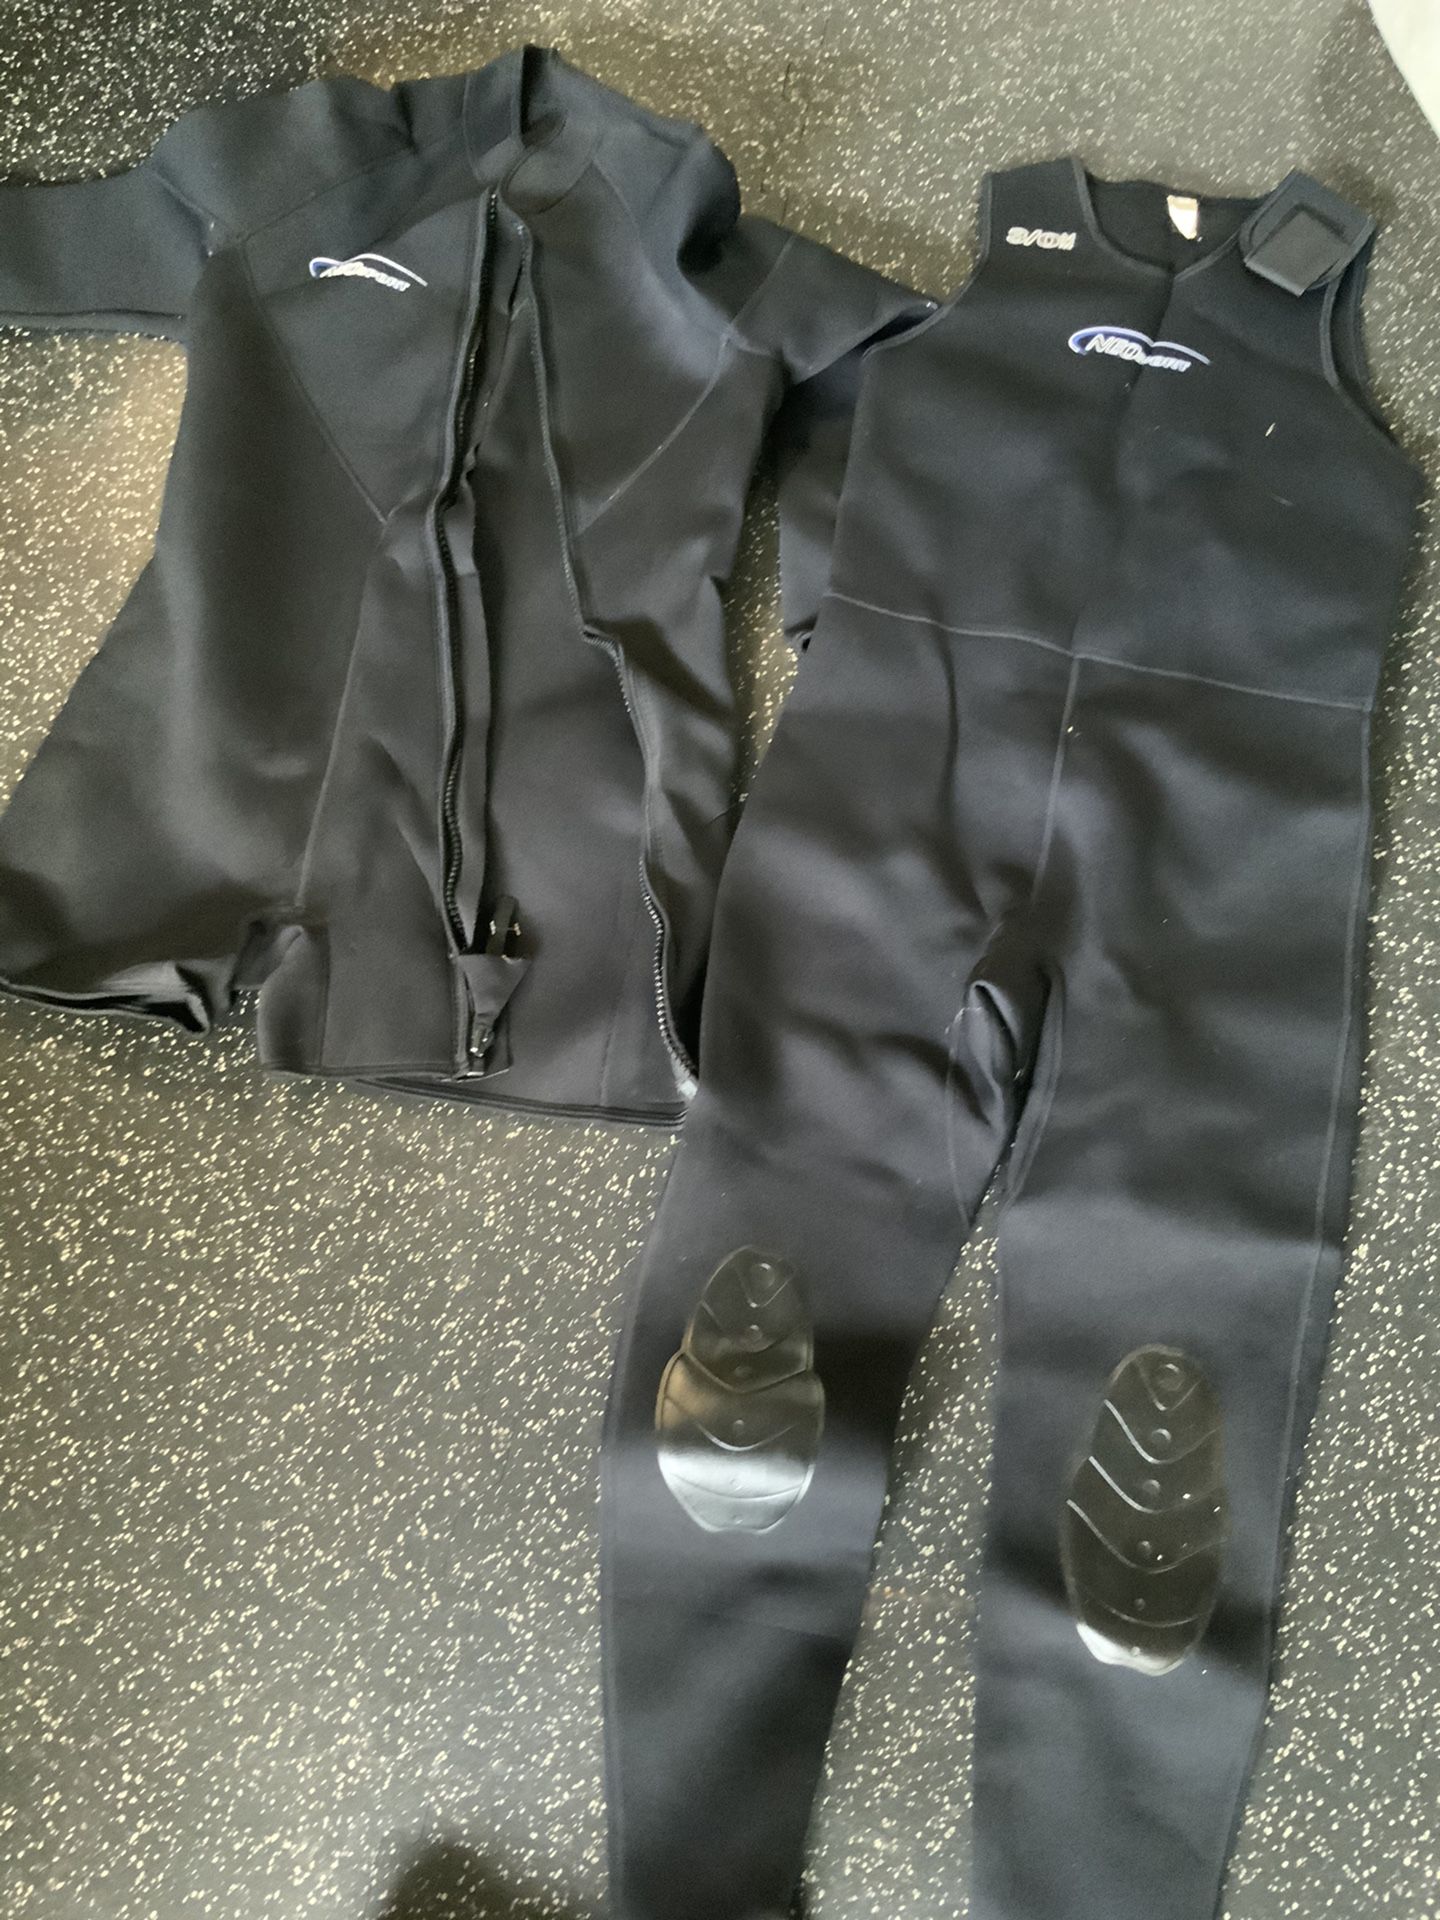 NeoSport Men’s Wetsuit Farmer Johns and Walk-In Jacket / 3mm